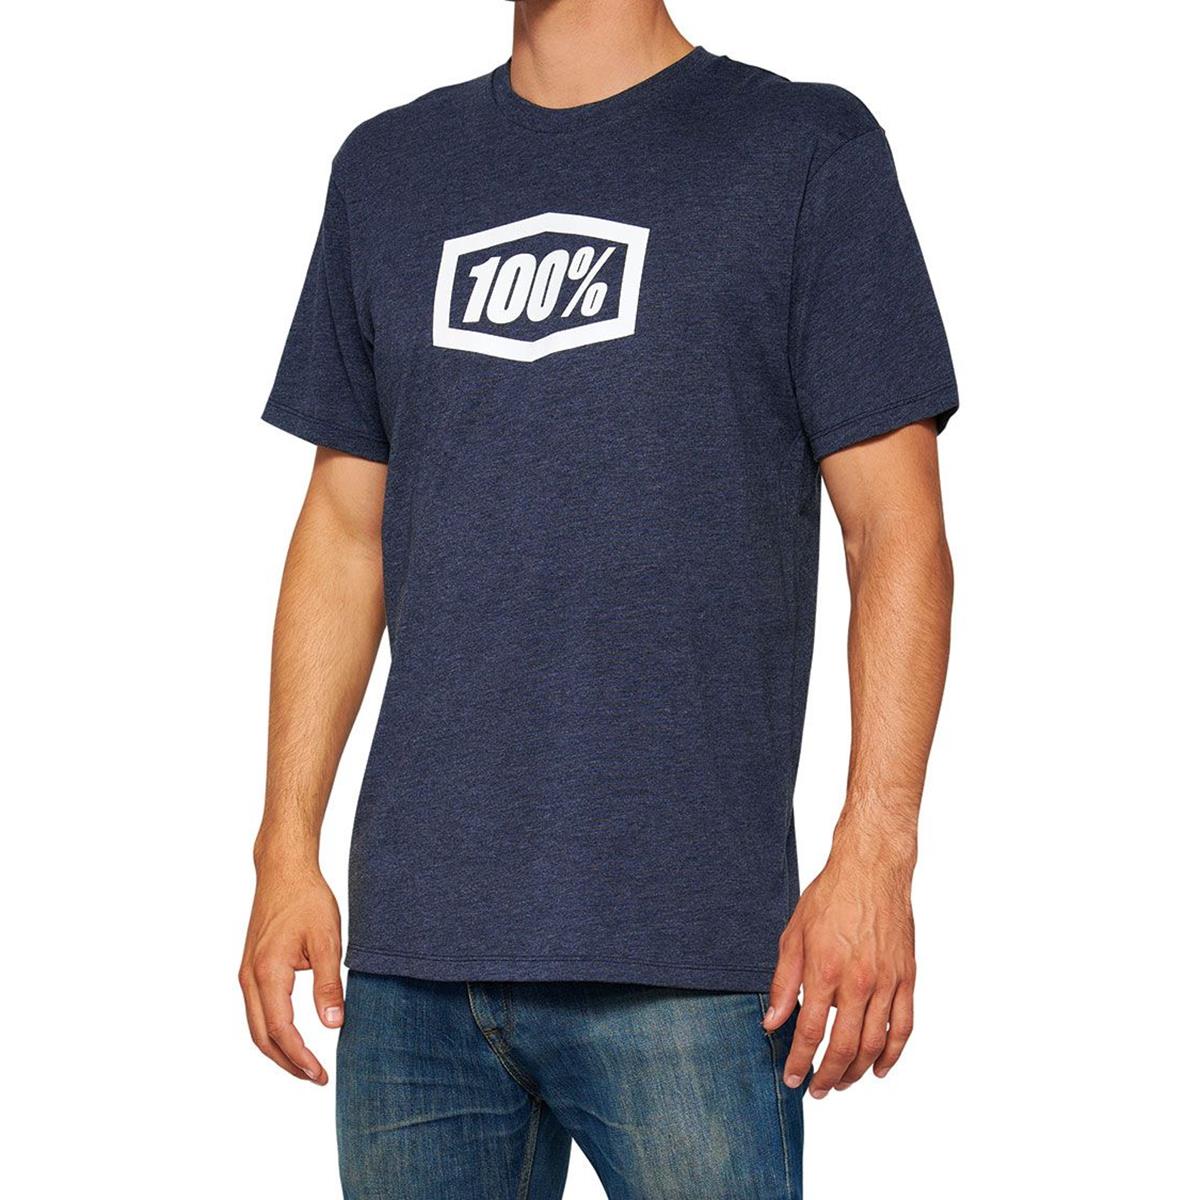 100% T-Shirt Icon